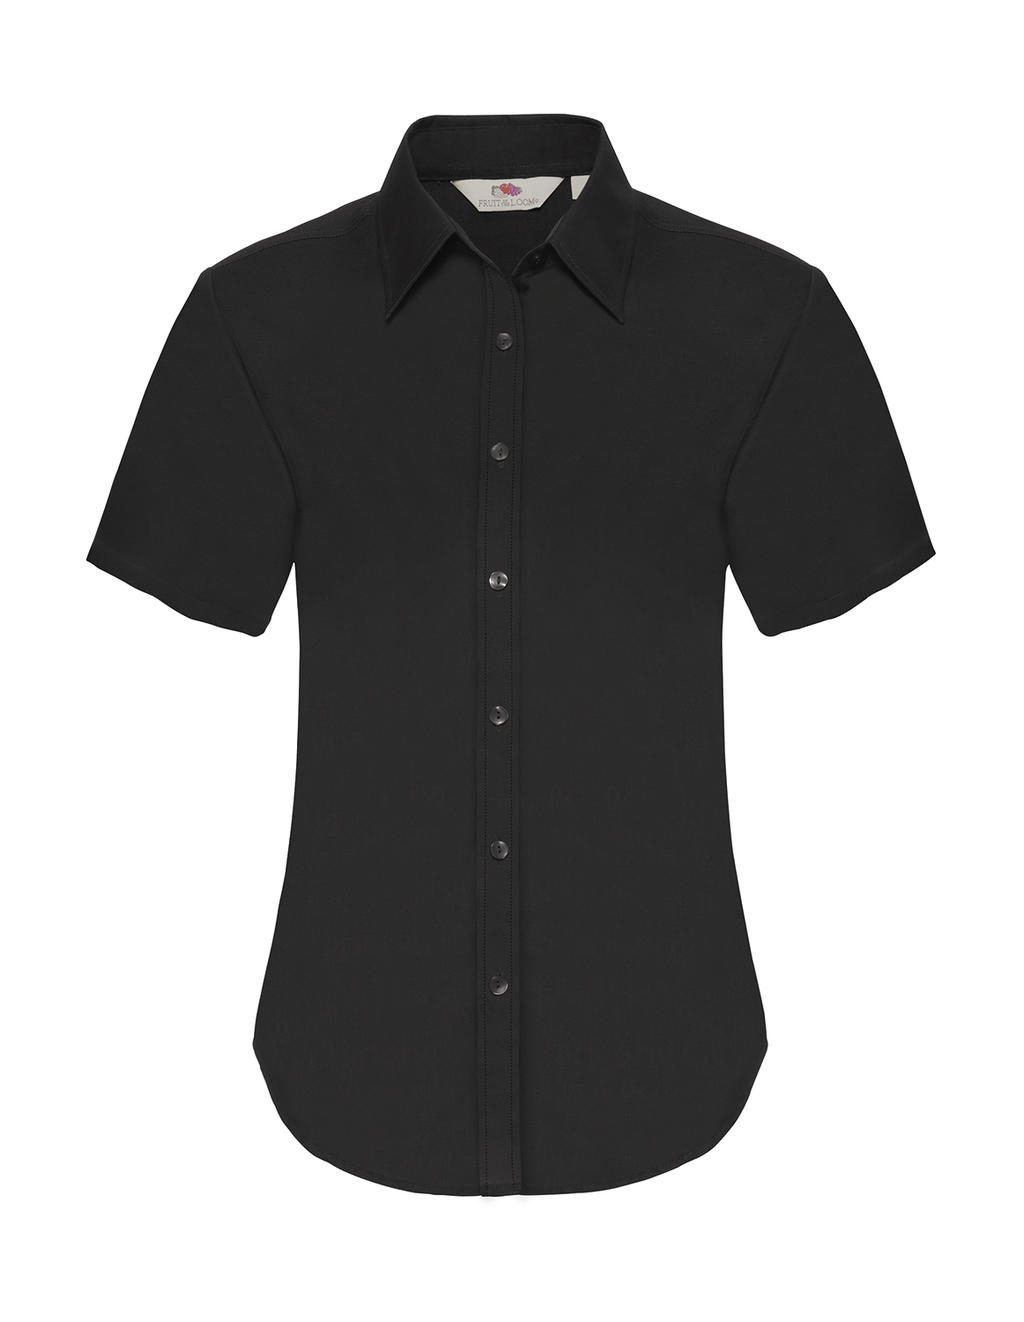  Ladies Oxford Shirt in Farbe Black